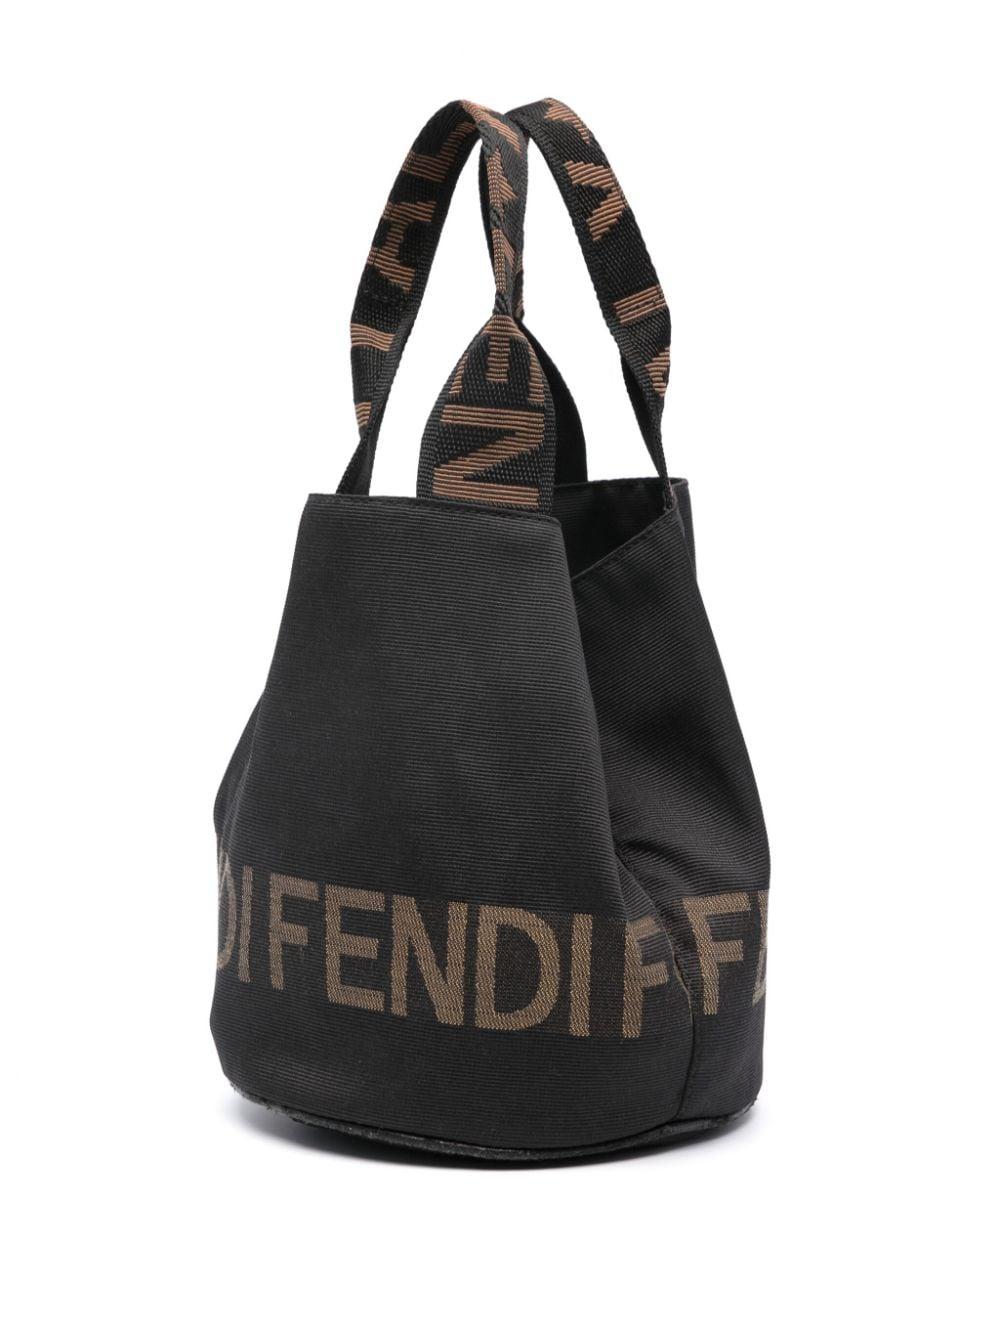 2000s Fendi black ottoman bucket bag featuring black
cotton gabardine weave, two logo-print handles, bucket body, a jacquard Fendi motif, an internal logo plaque and a concealed press-stud fastening.
Length 7.1in (18cm)
Height 11.8in. (30 cm)
Depth